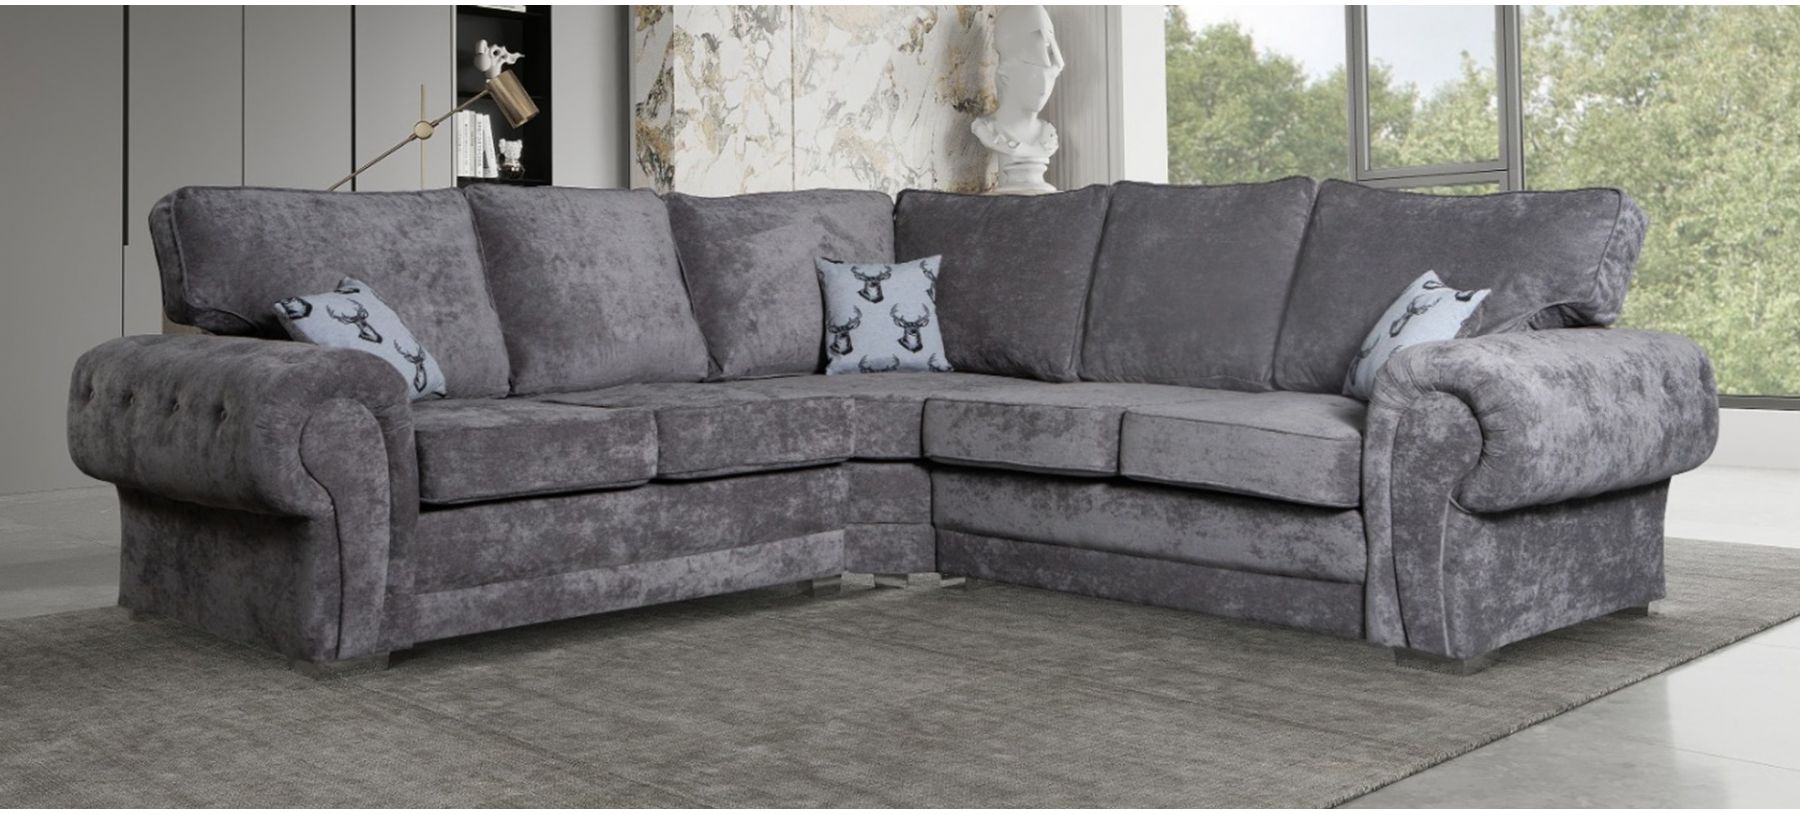 Verona Grey 2C2 Formal Back Fabric Corner Sofa With Chrome Legs | Leather  Sofa World